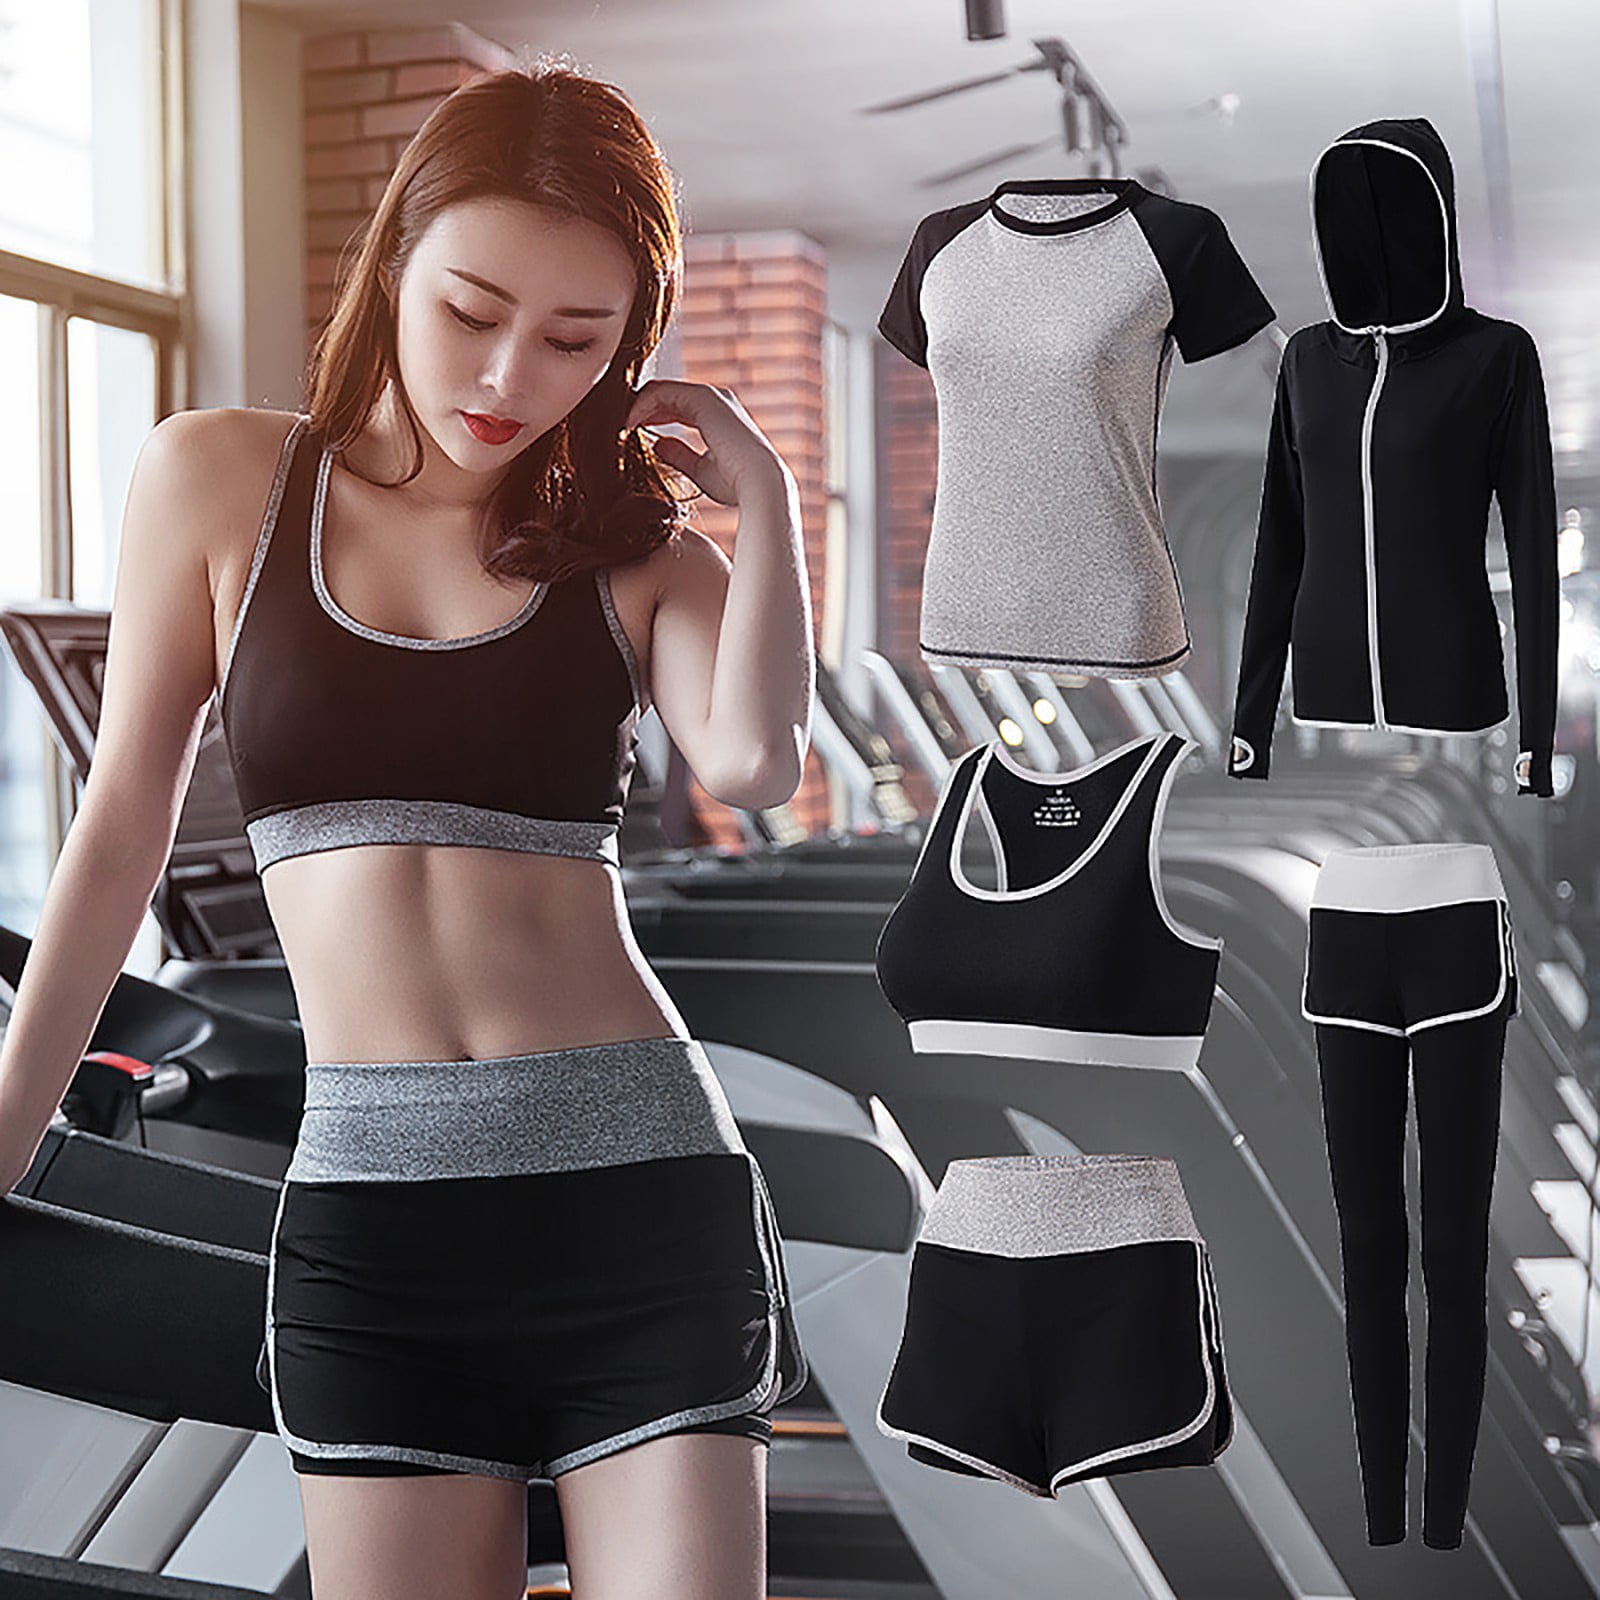 XPINYT 5pcs Workout Outfits for Women Athletic Sets Sport Suits Yoga Gym Fitness Exercise Clothes Jogging Tracksuits